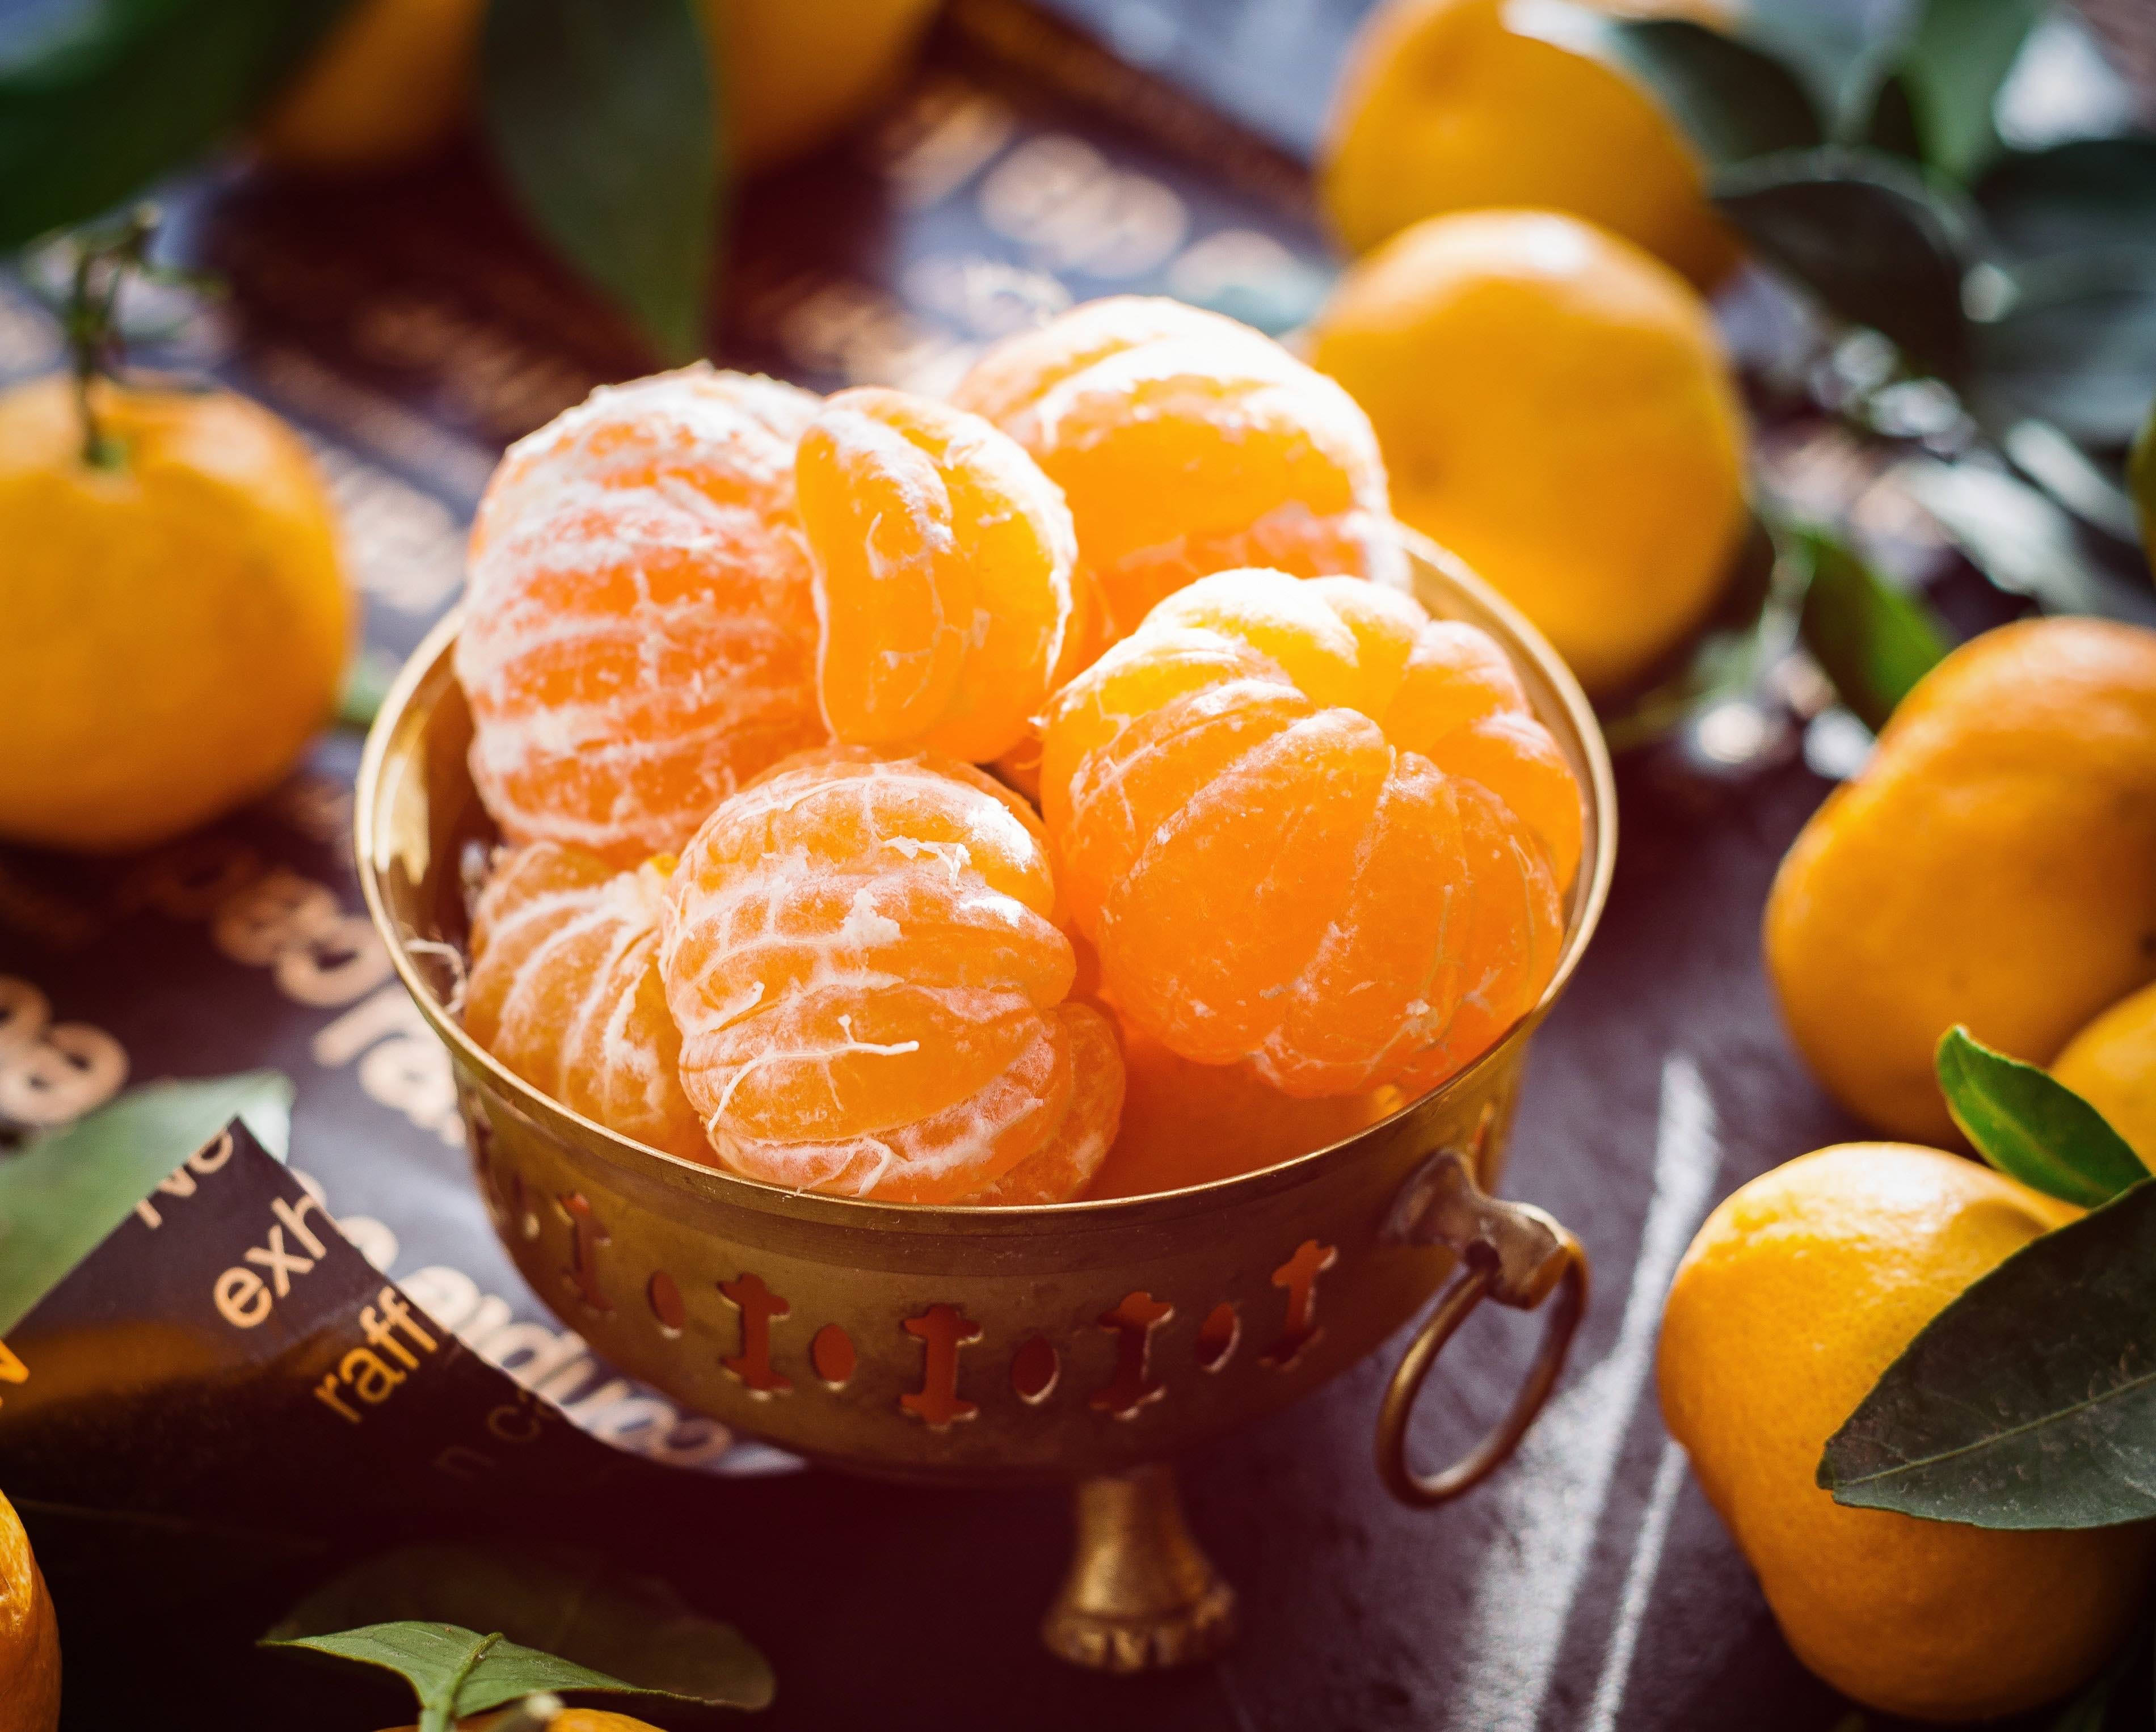 Four benefits of orange fruit and vegetables